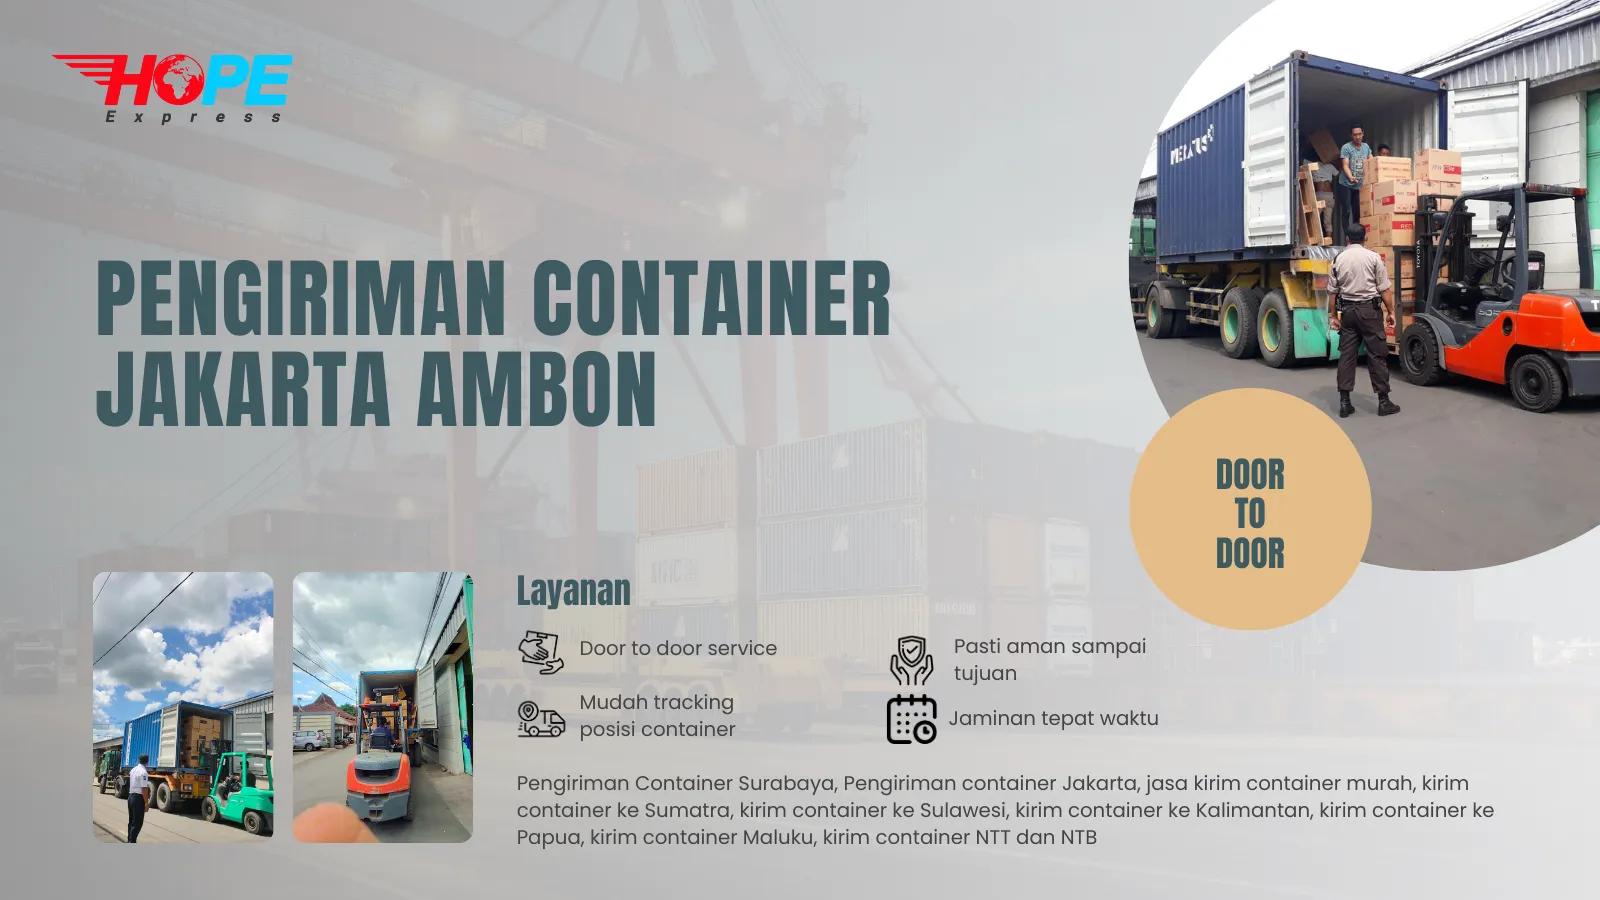 Pengiriman Container Jakarta Ambon